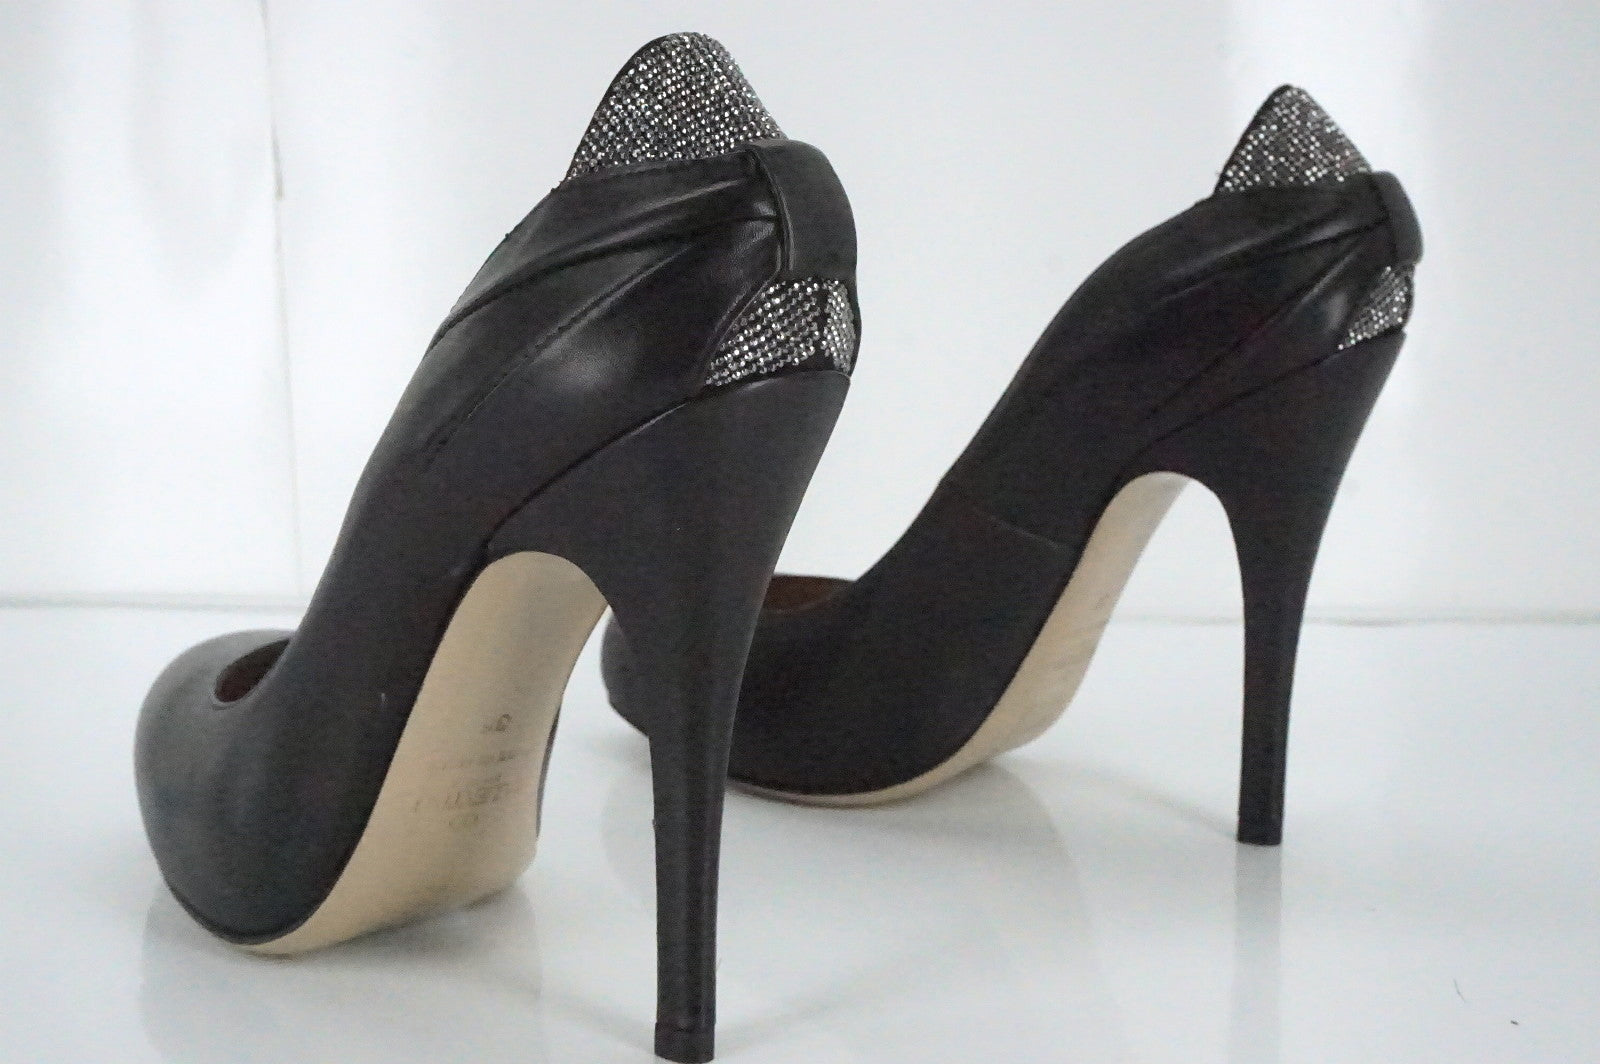 Valentino Black Leather Drape Studded High Heel Pumps Size 36 NIB $745 Women's